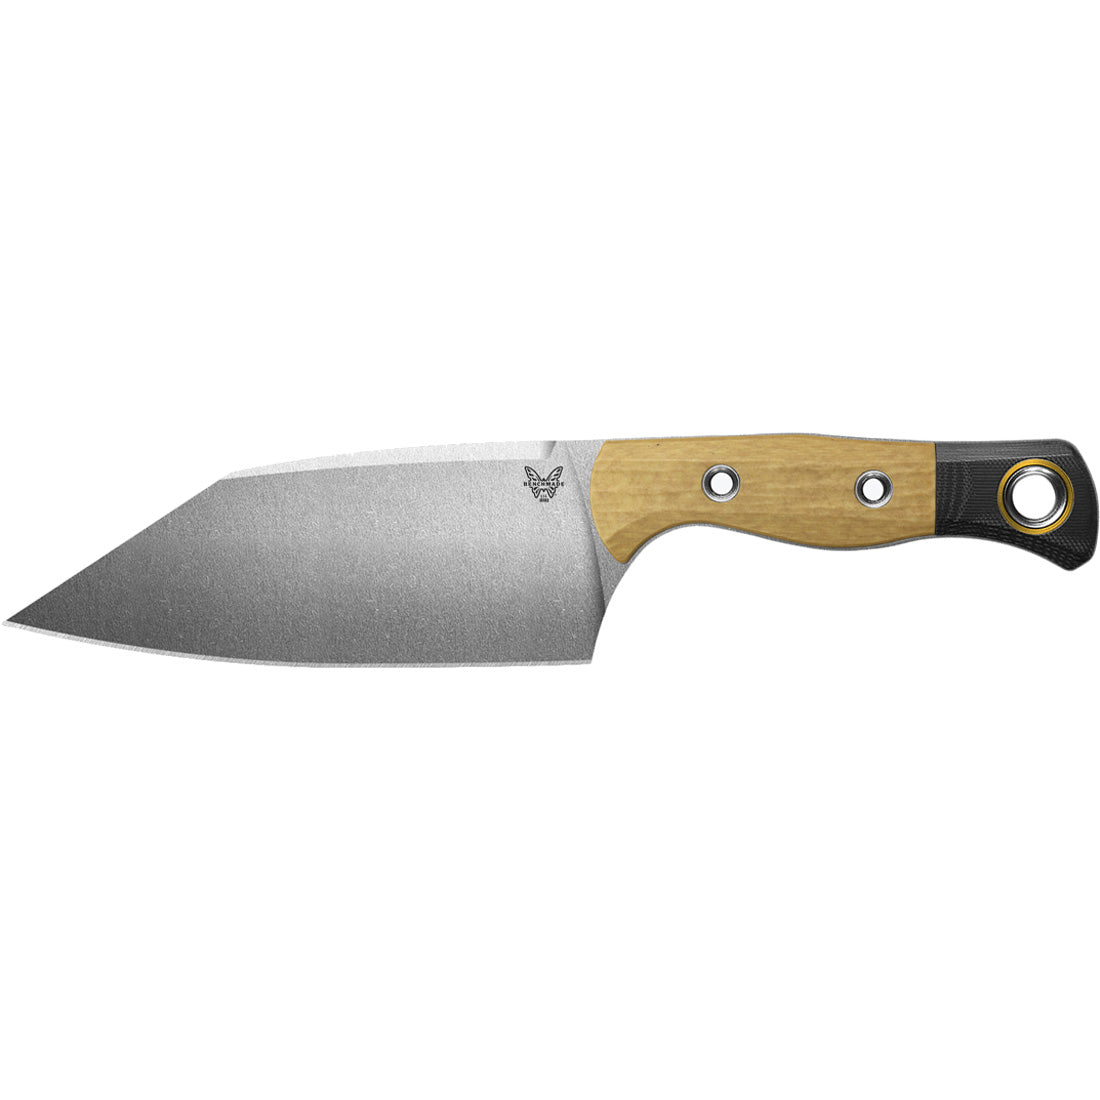 Benchmade 940-2 and Work Sharp Field Sharpener • Evening Knife Maintenance